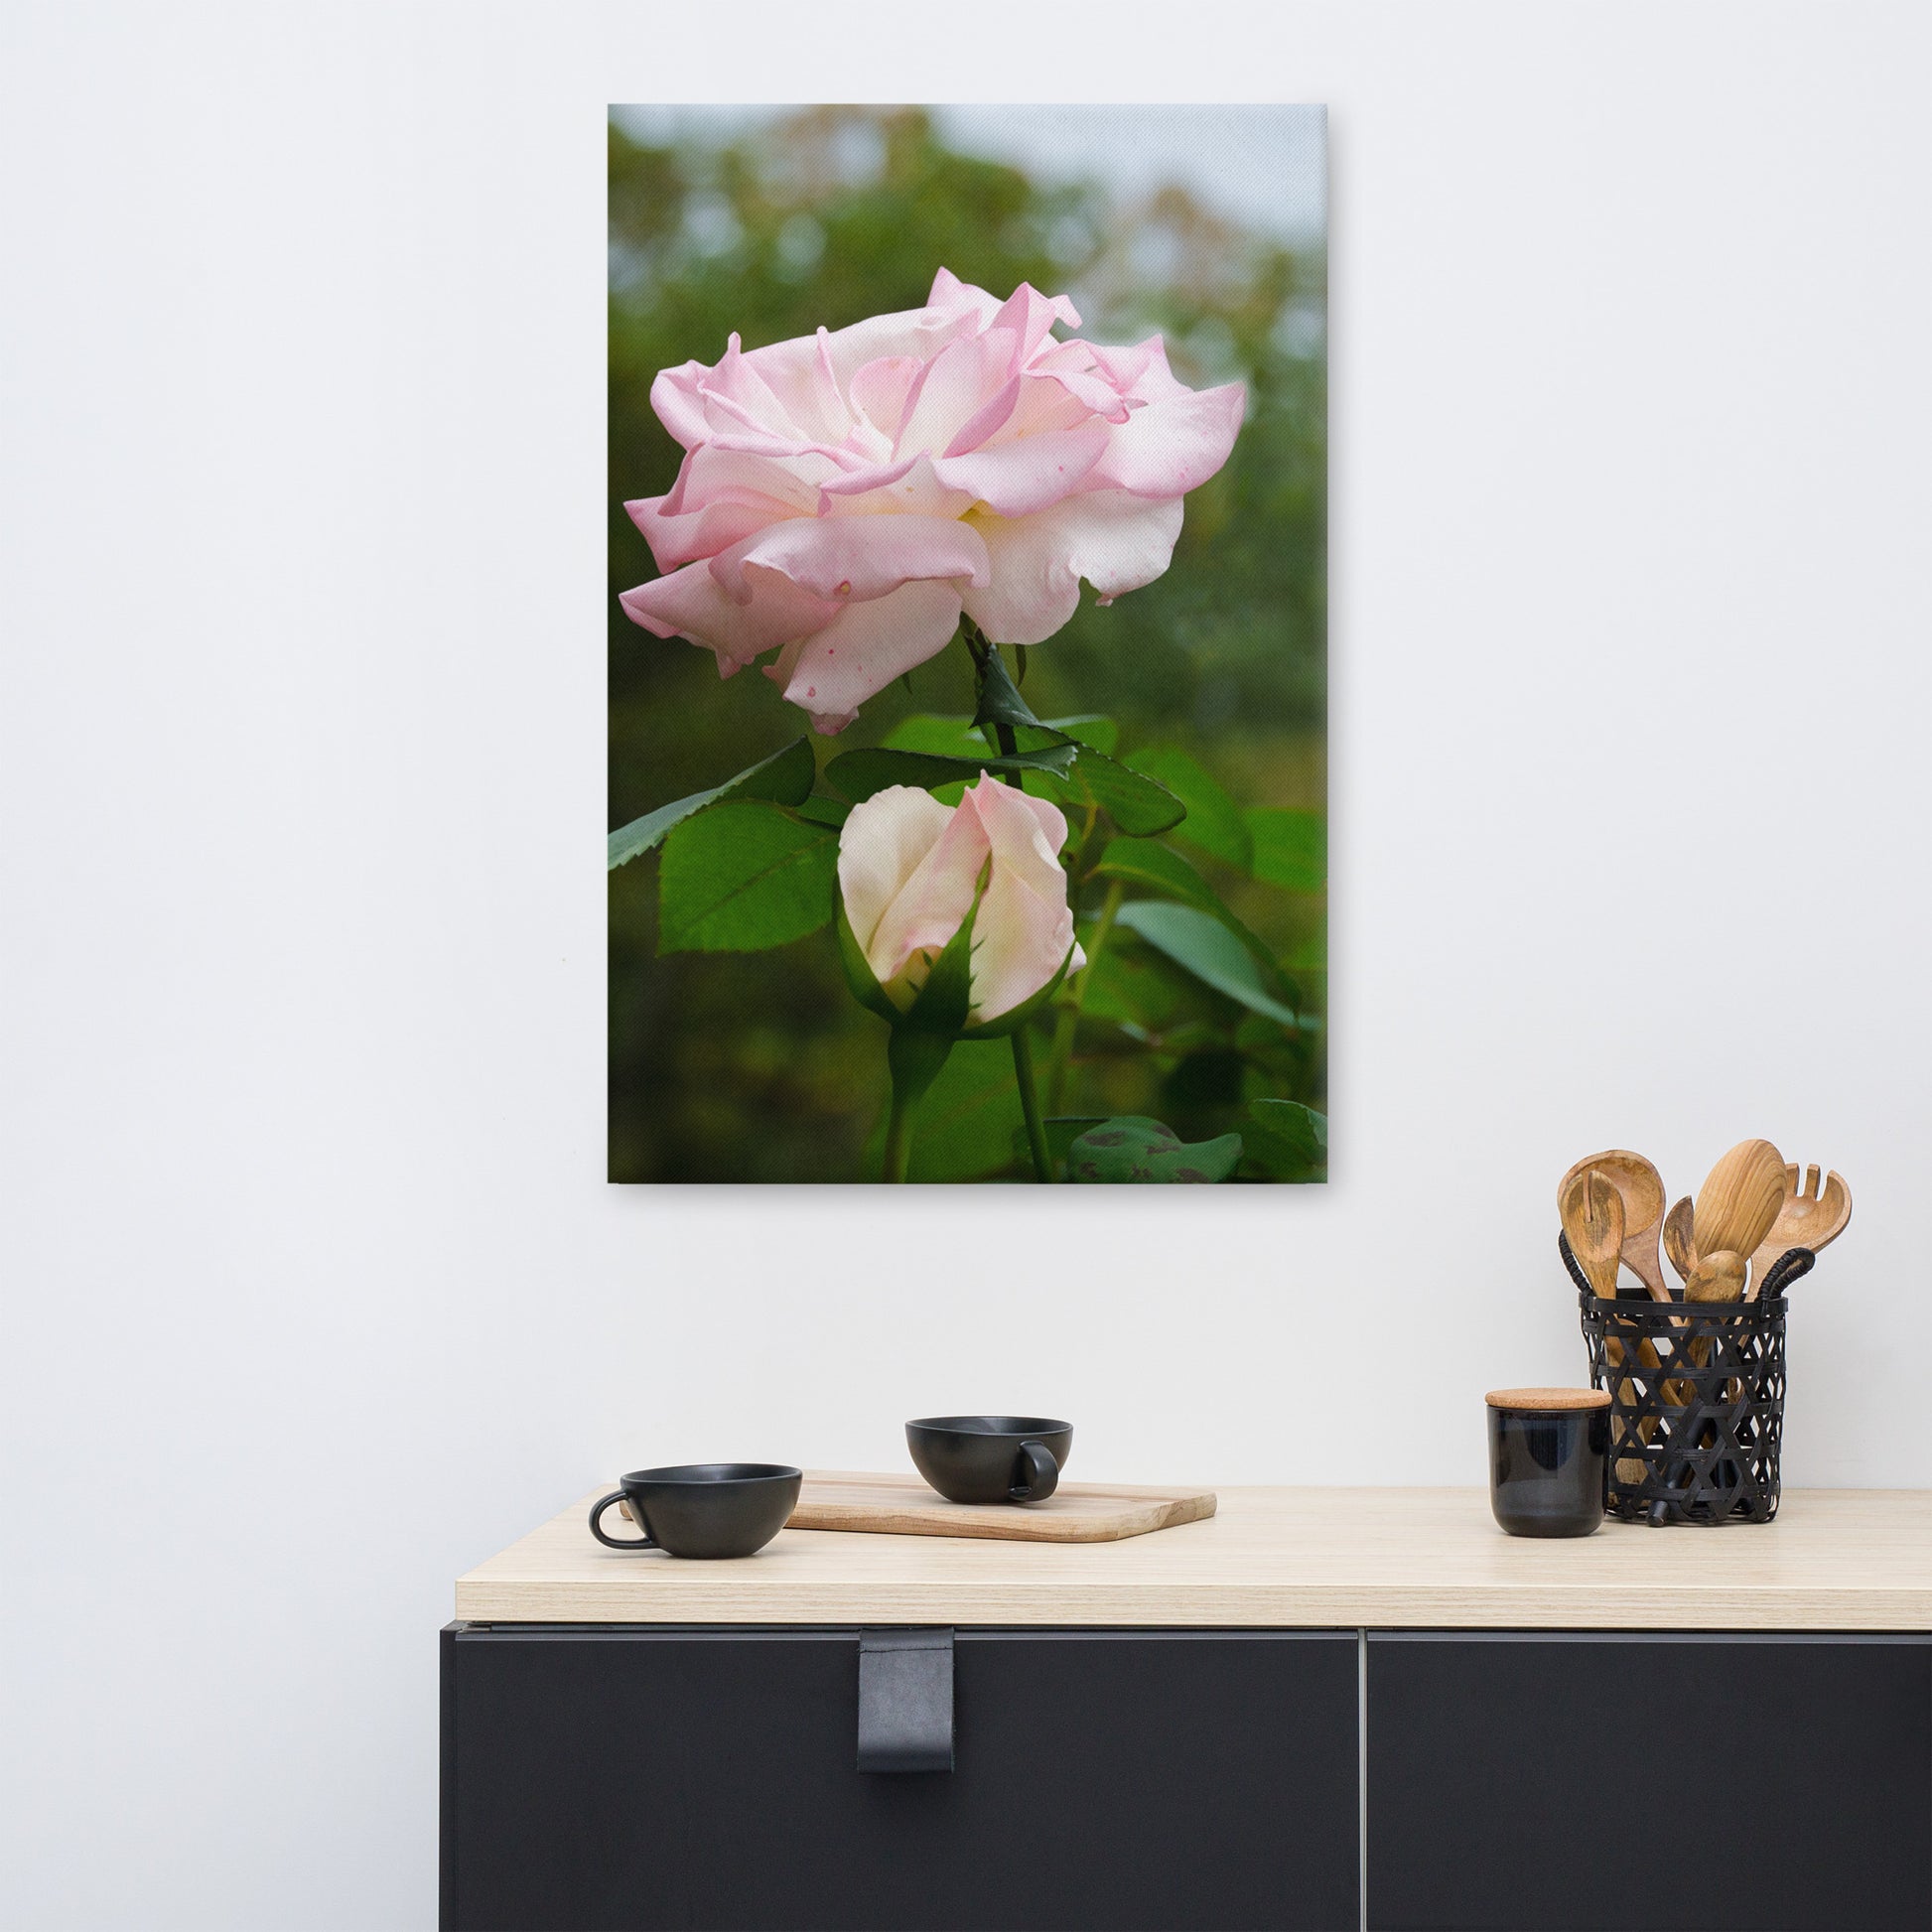 Floral Artwork On Canvas: Admiration Rose Botanical / Floral / Flora / Flowers Nature Photograph Canvas Wall Art Print - Artwork